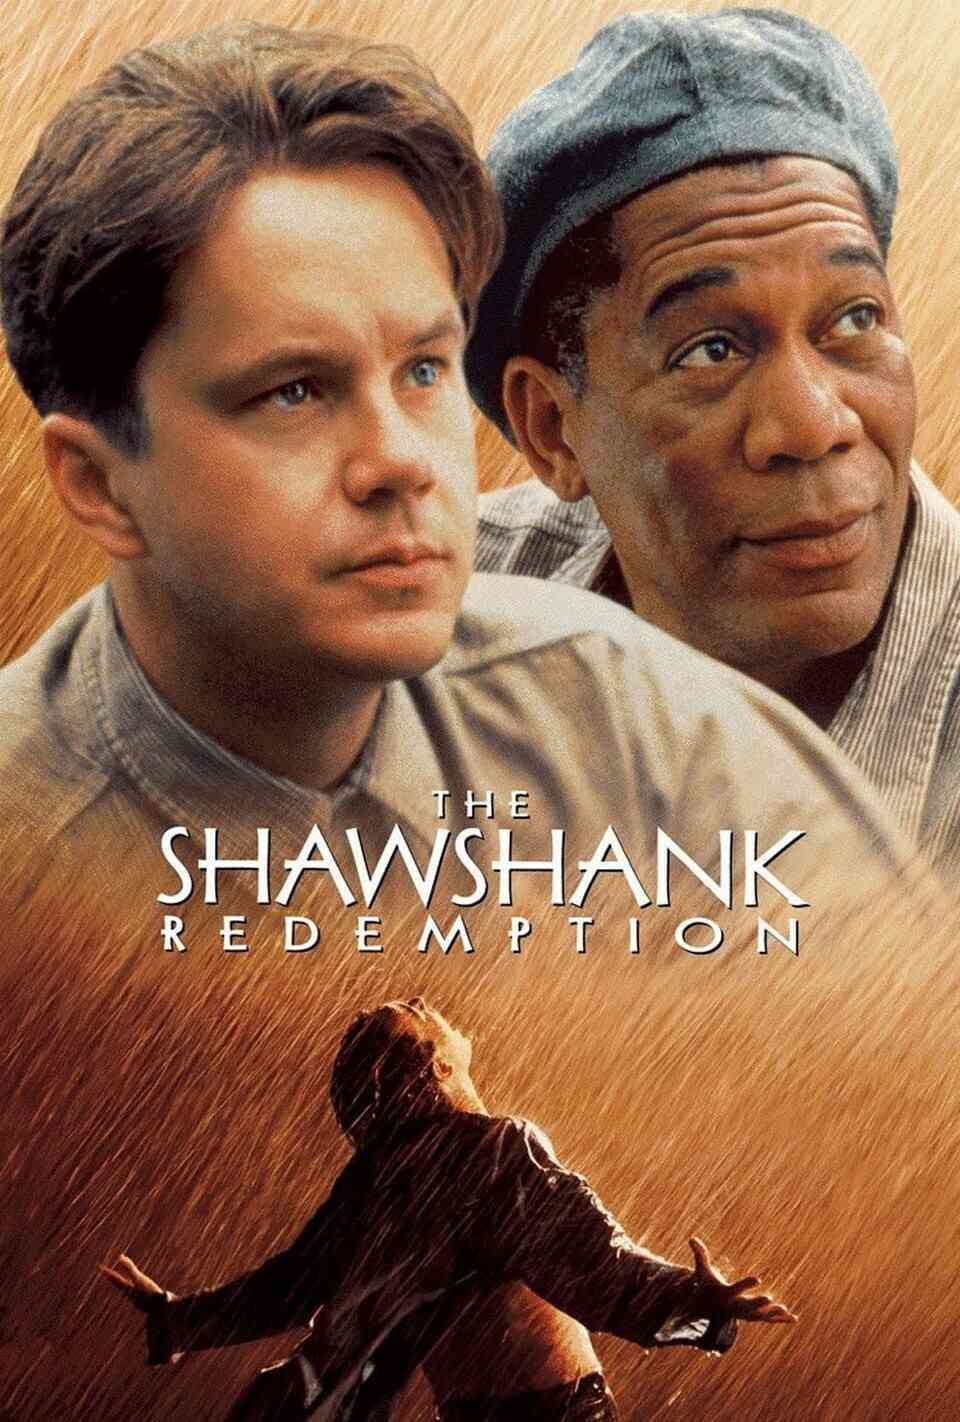 Read The Shawshank Redemption screenplay.